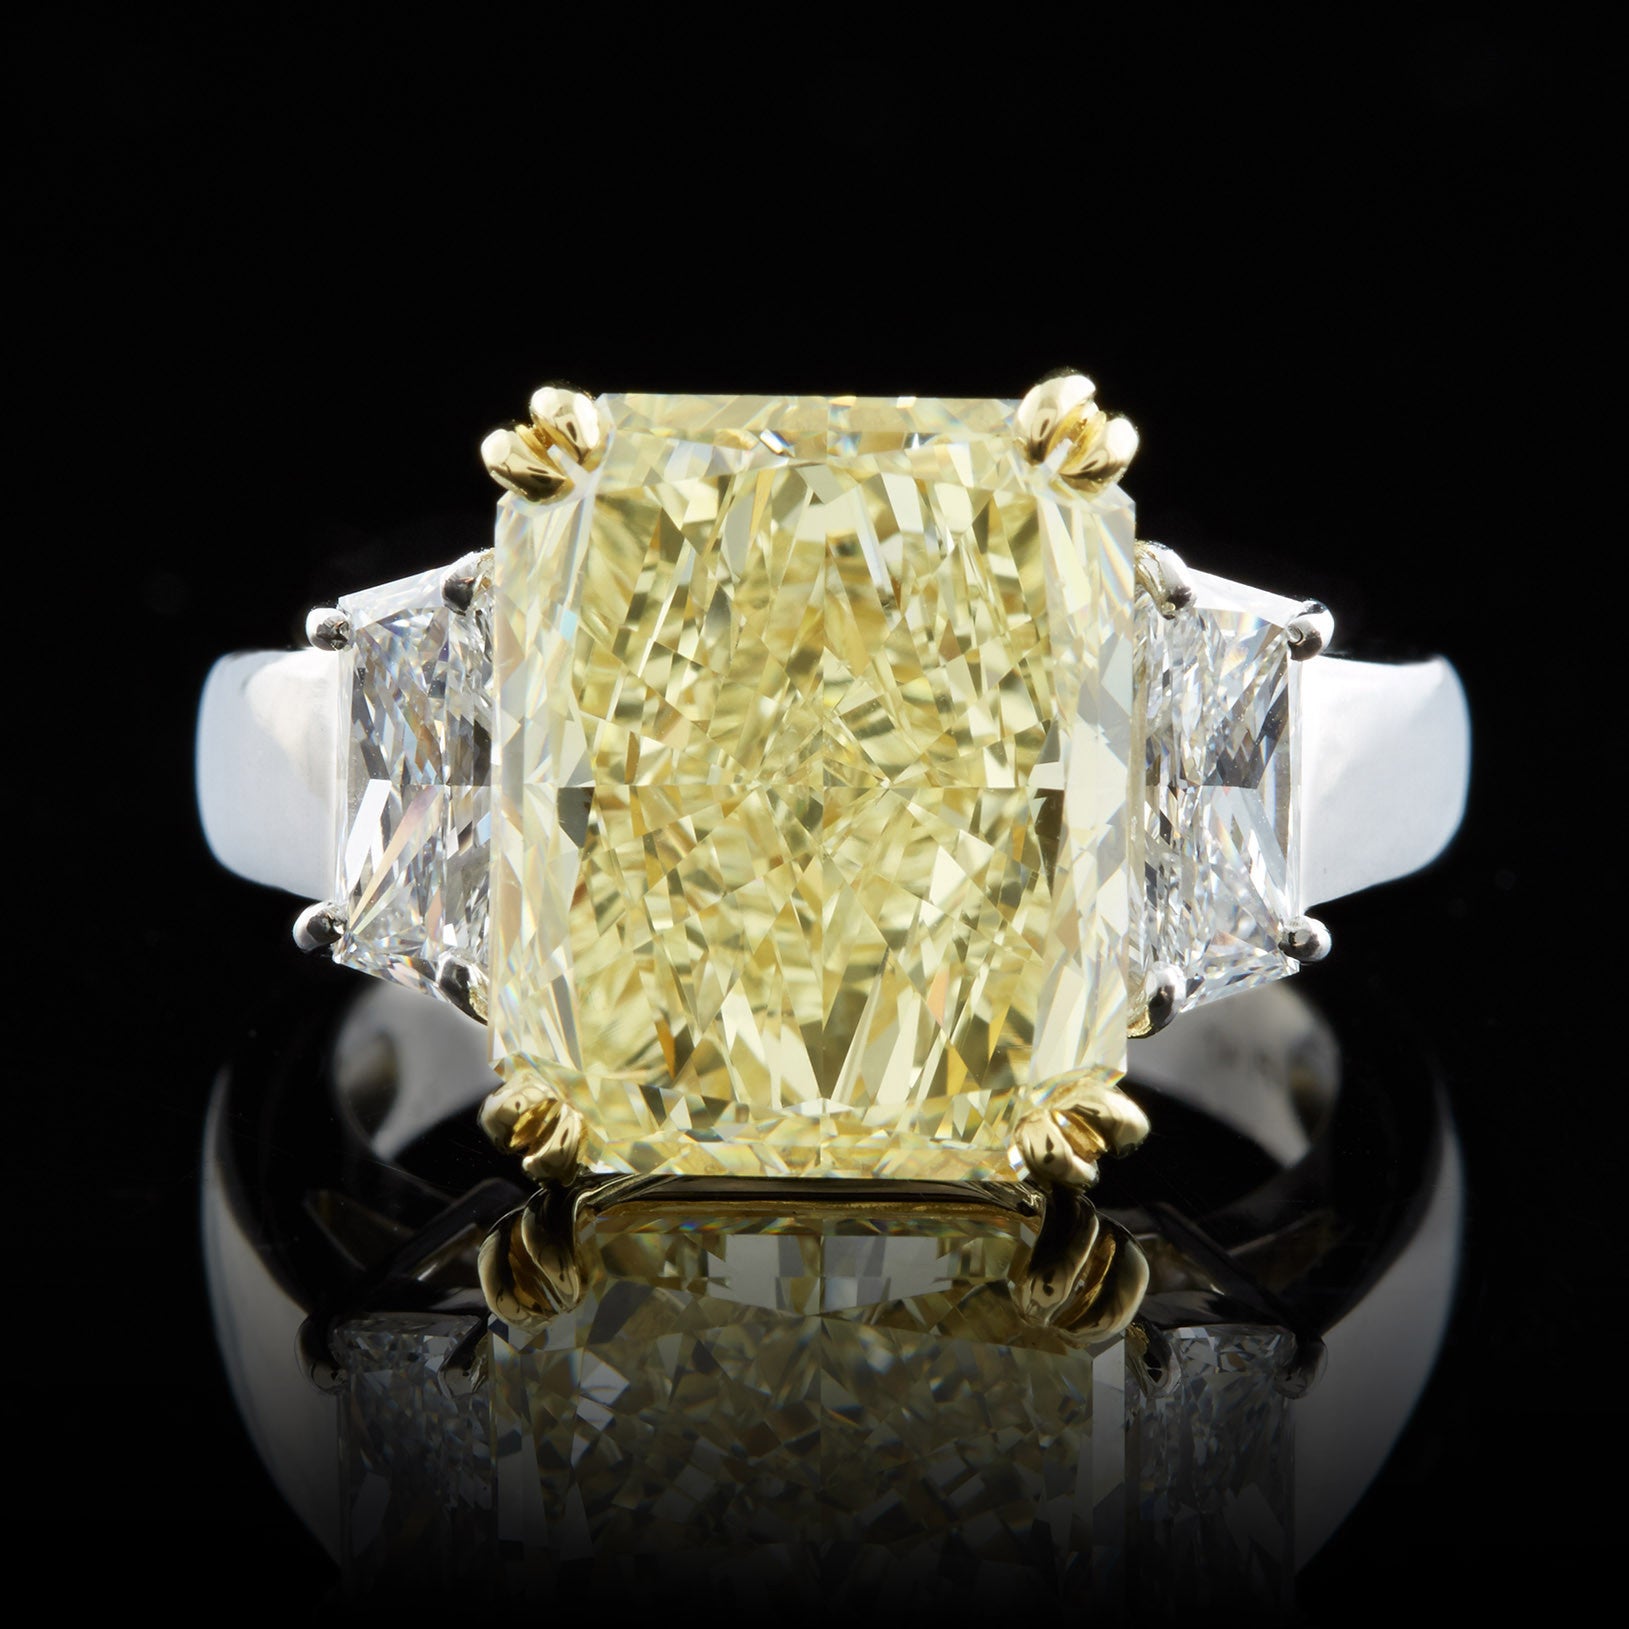 8.0 ct Oval Cut Moissanite White Gold Engagement Ring from Black Diamonds  New York